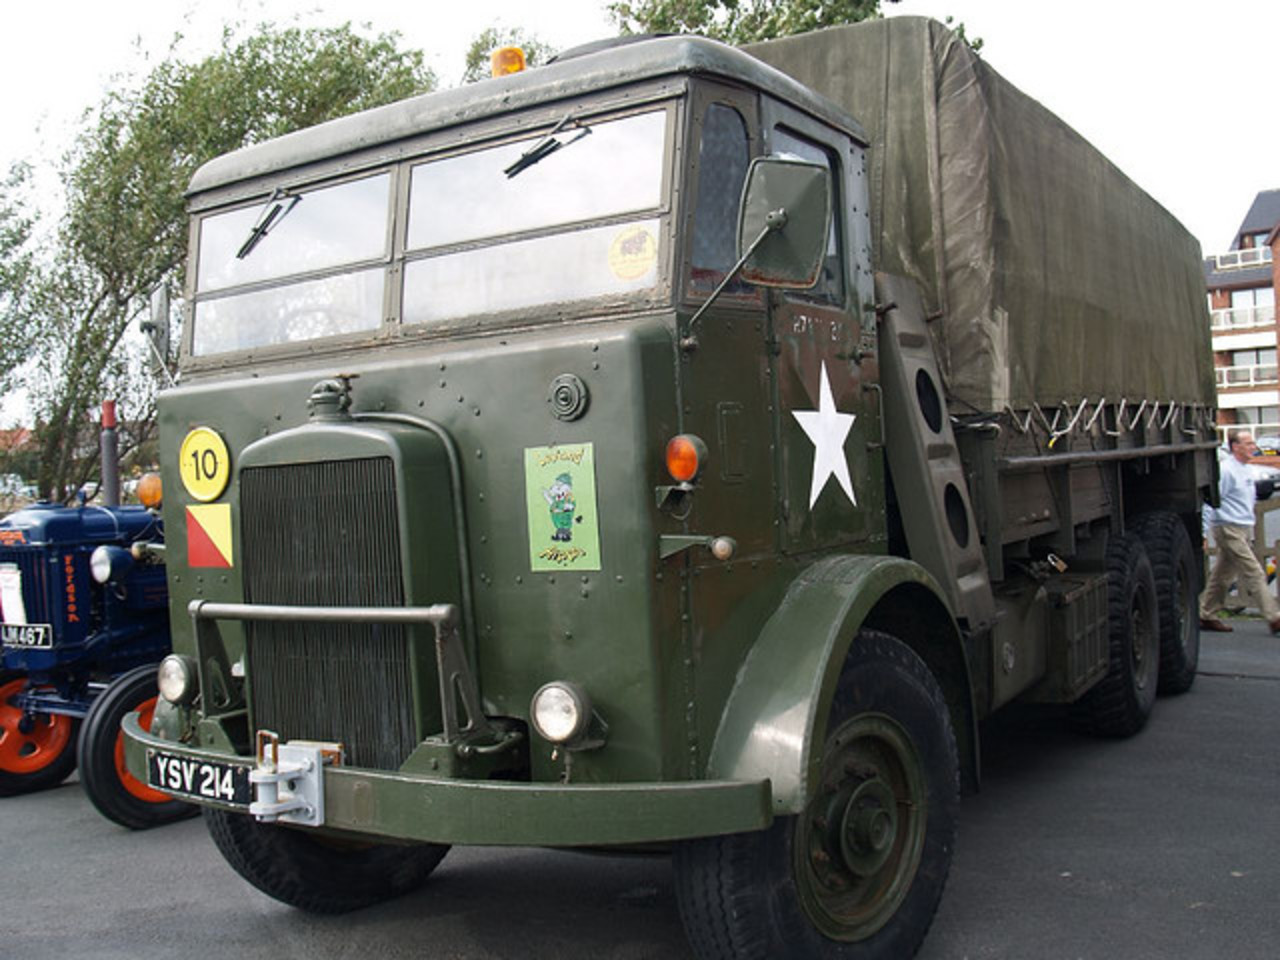 Camions de l'armée Hippo de Leyland - 1945 / Flickr - Partage de photos!